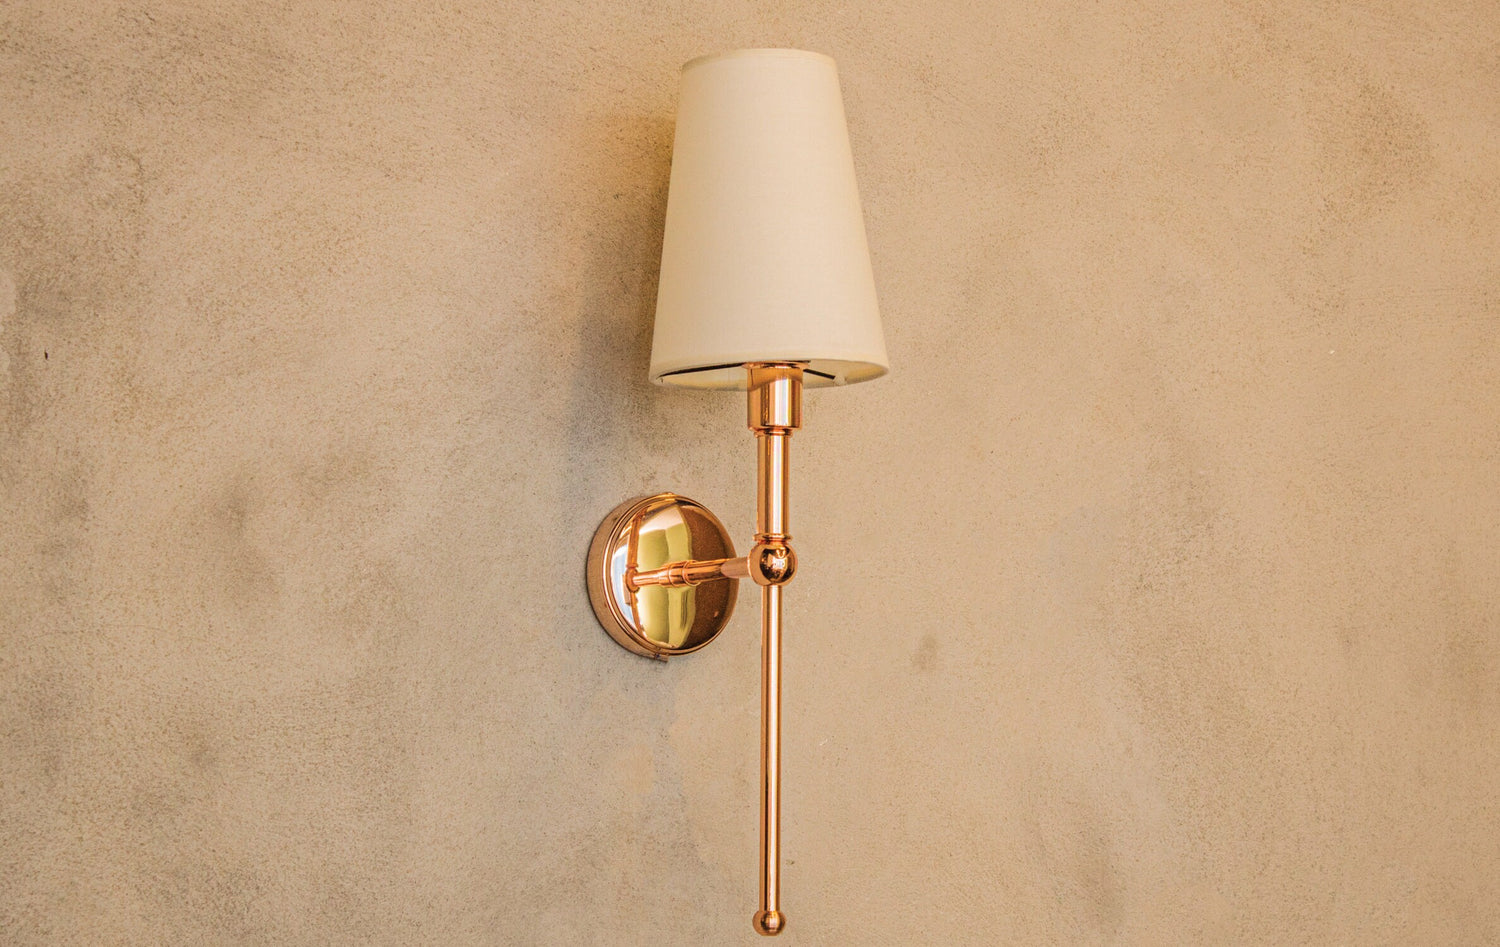 Classic Mid Century Handmade Lighting, Art Deco Brass Wall Mounted Lamp Shade, Home Decor Sconce, Housewarming Gift Wall Light MODEL: KAZAH